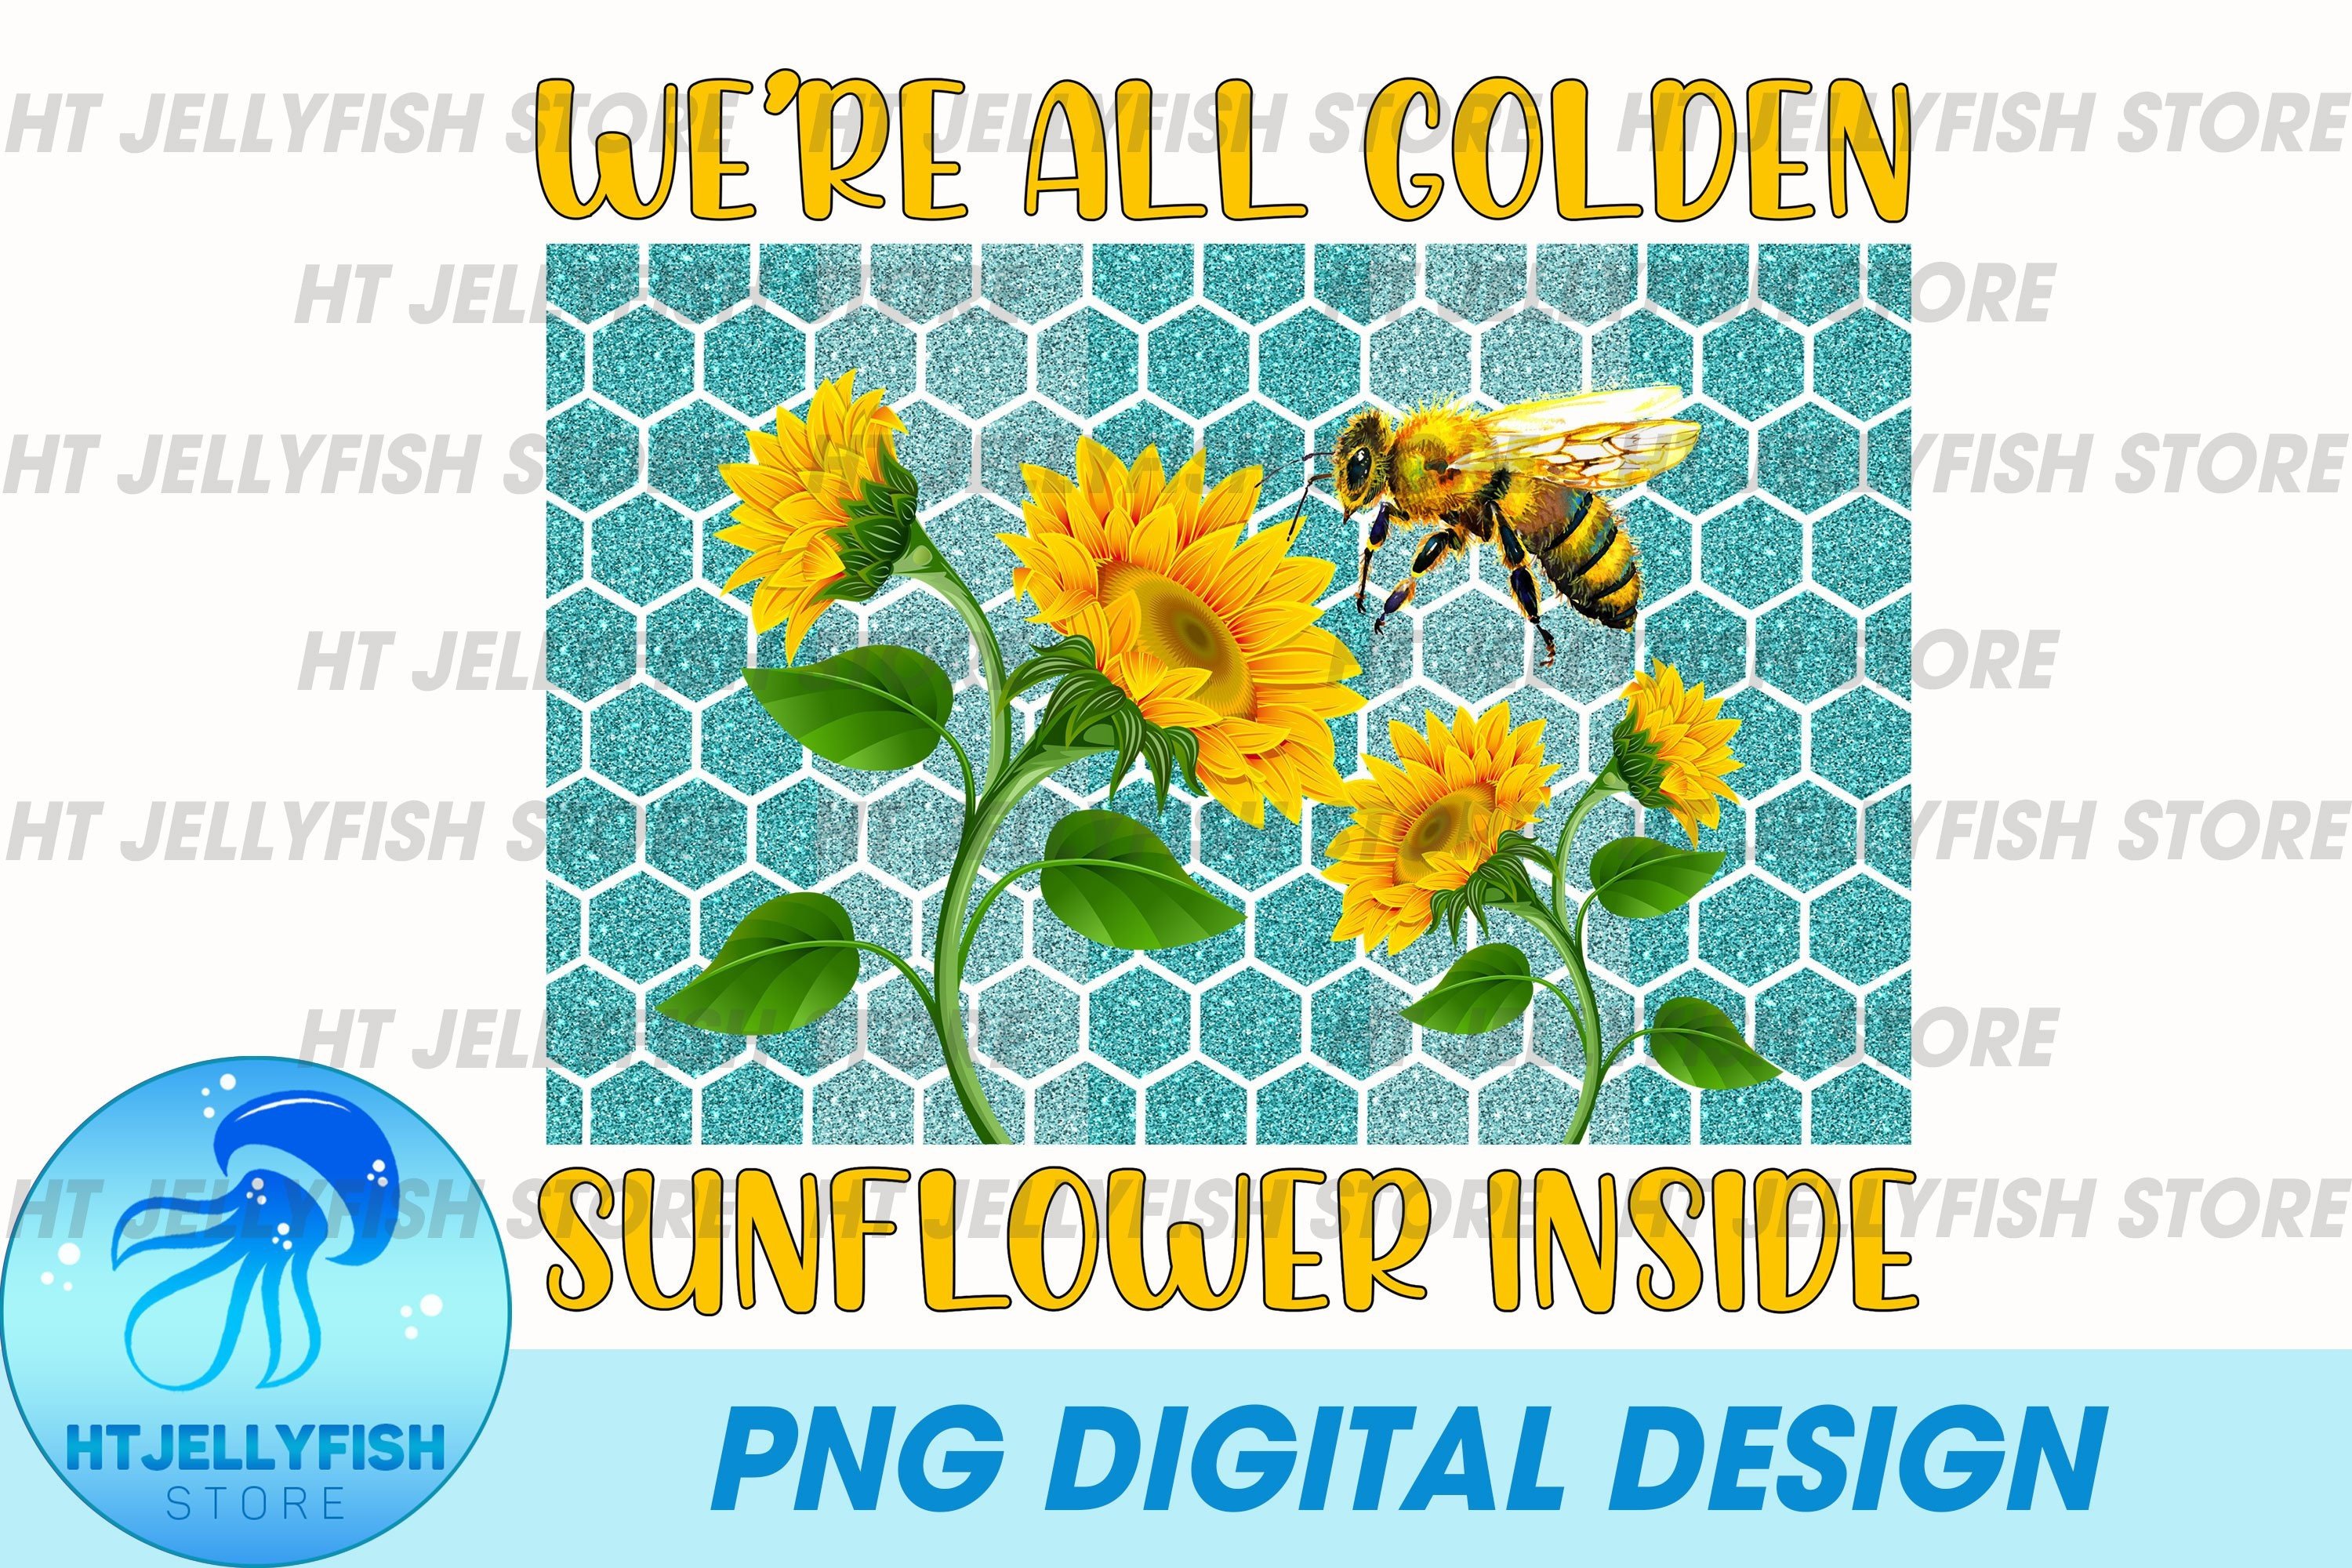 Sunflower Teal Glitter Sublimation Waterslide Digital 